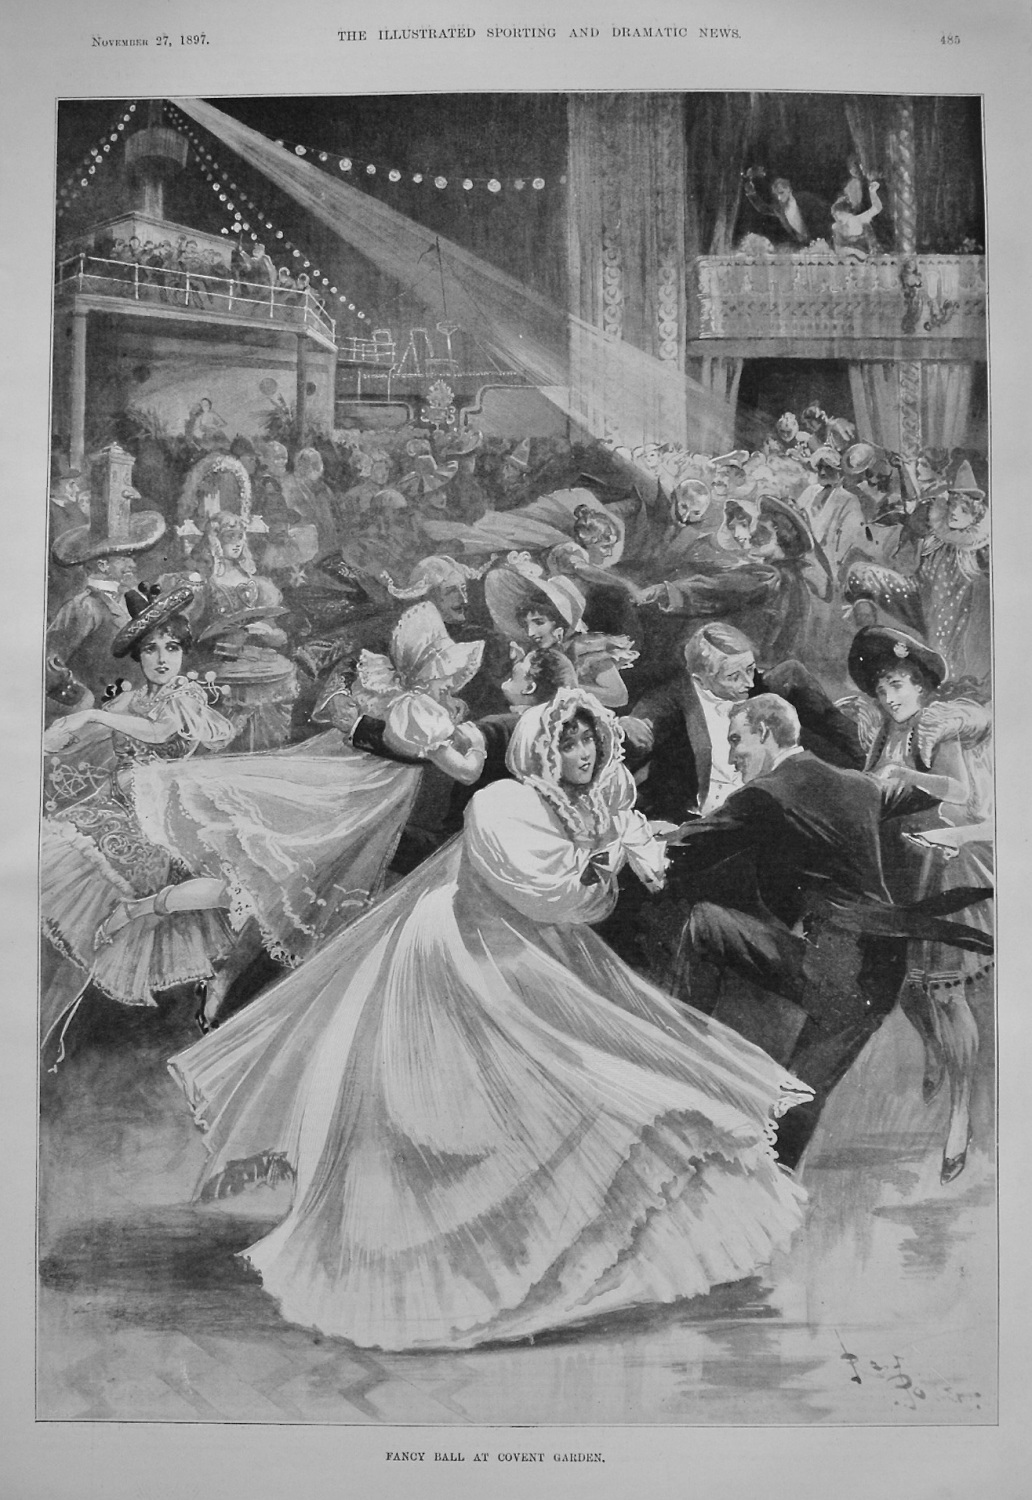 Fancy Ball at Covent Garden. 1897